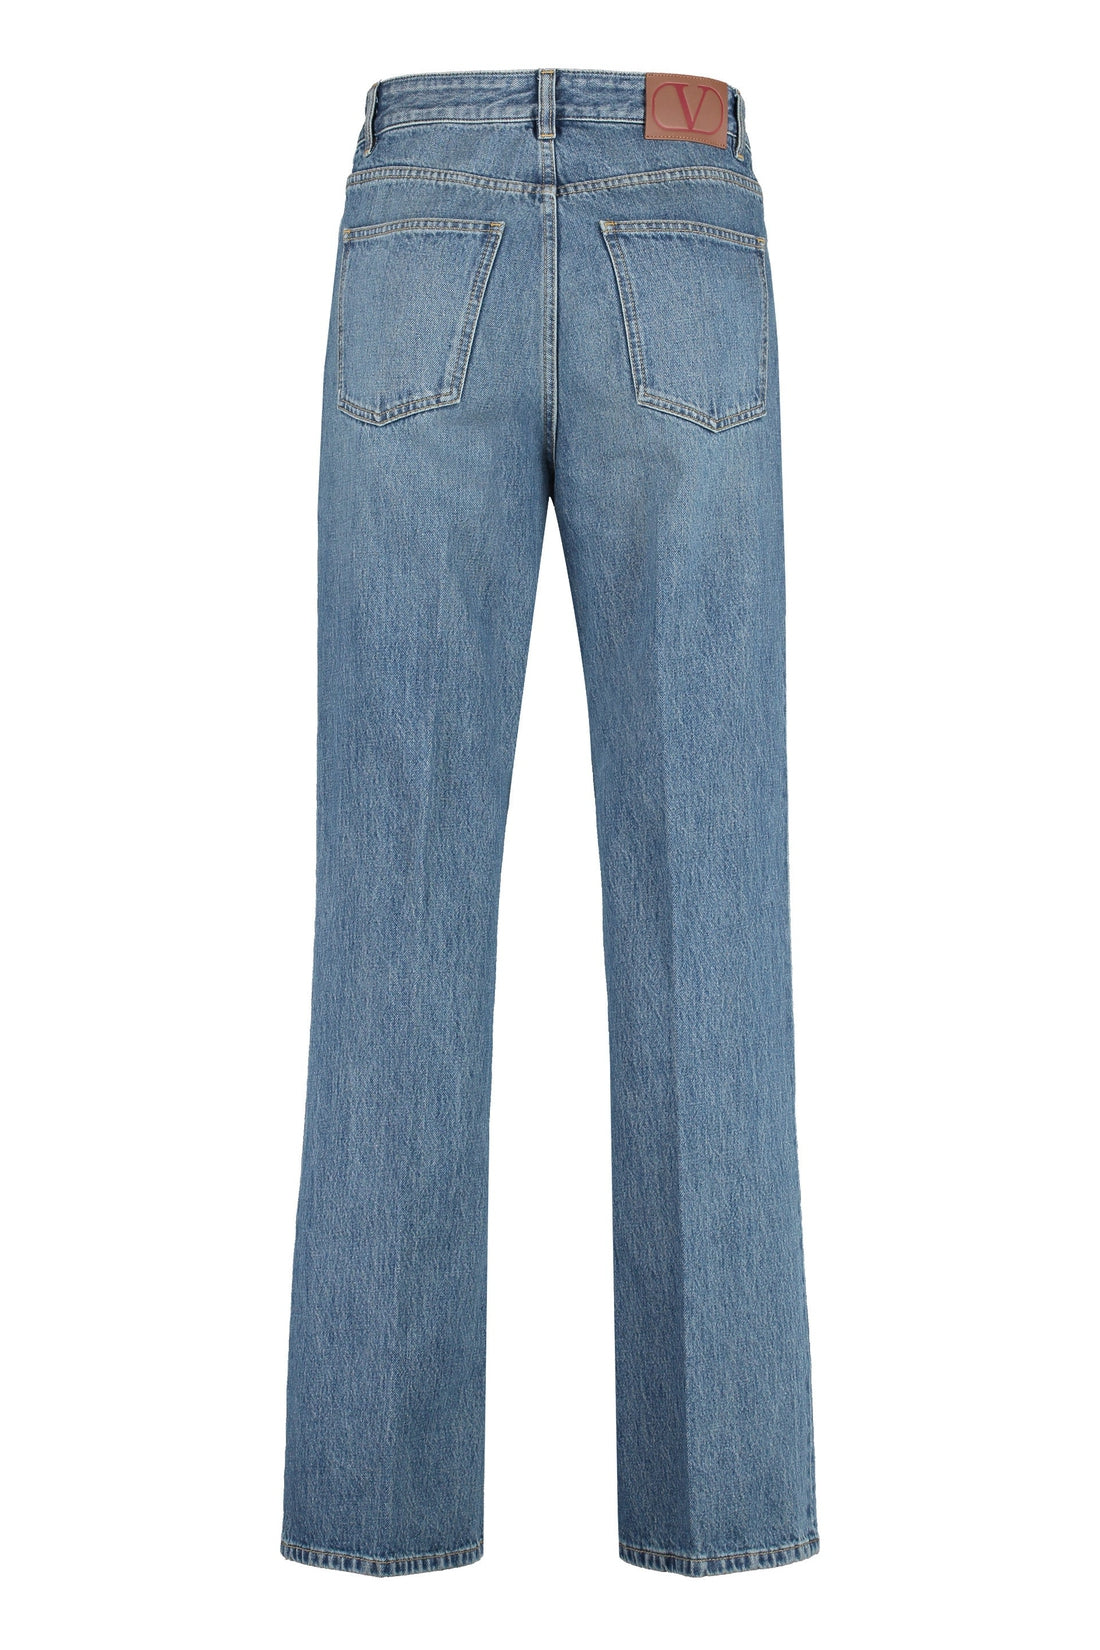 Valentino-OUTLET-SALE-5-pocket straight-leg jeans-ARCHIVIST